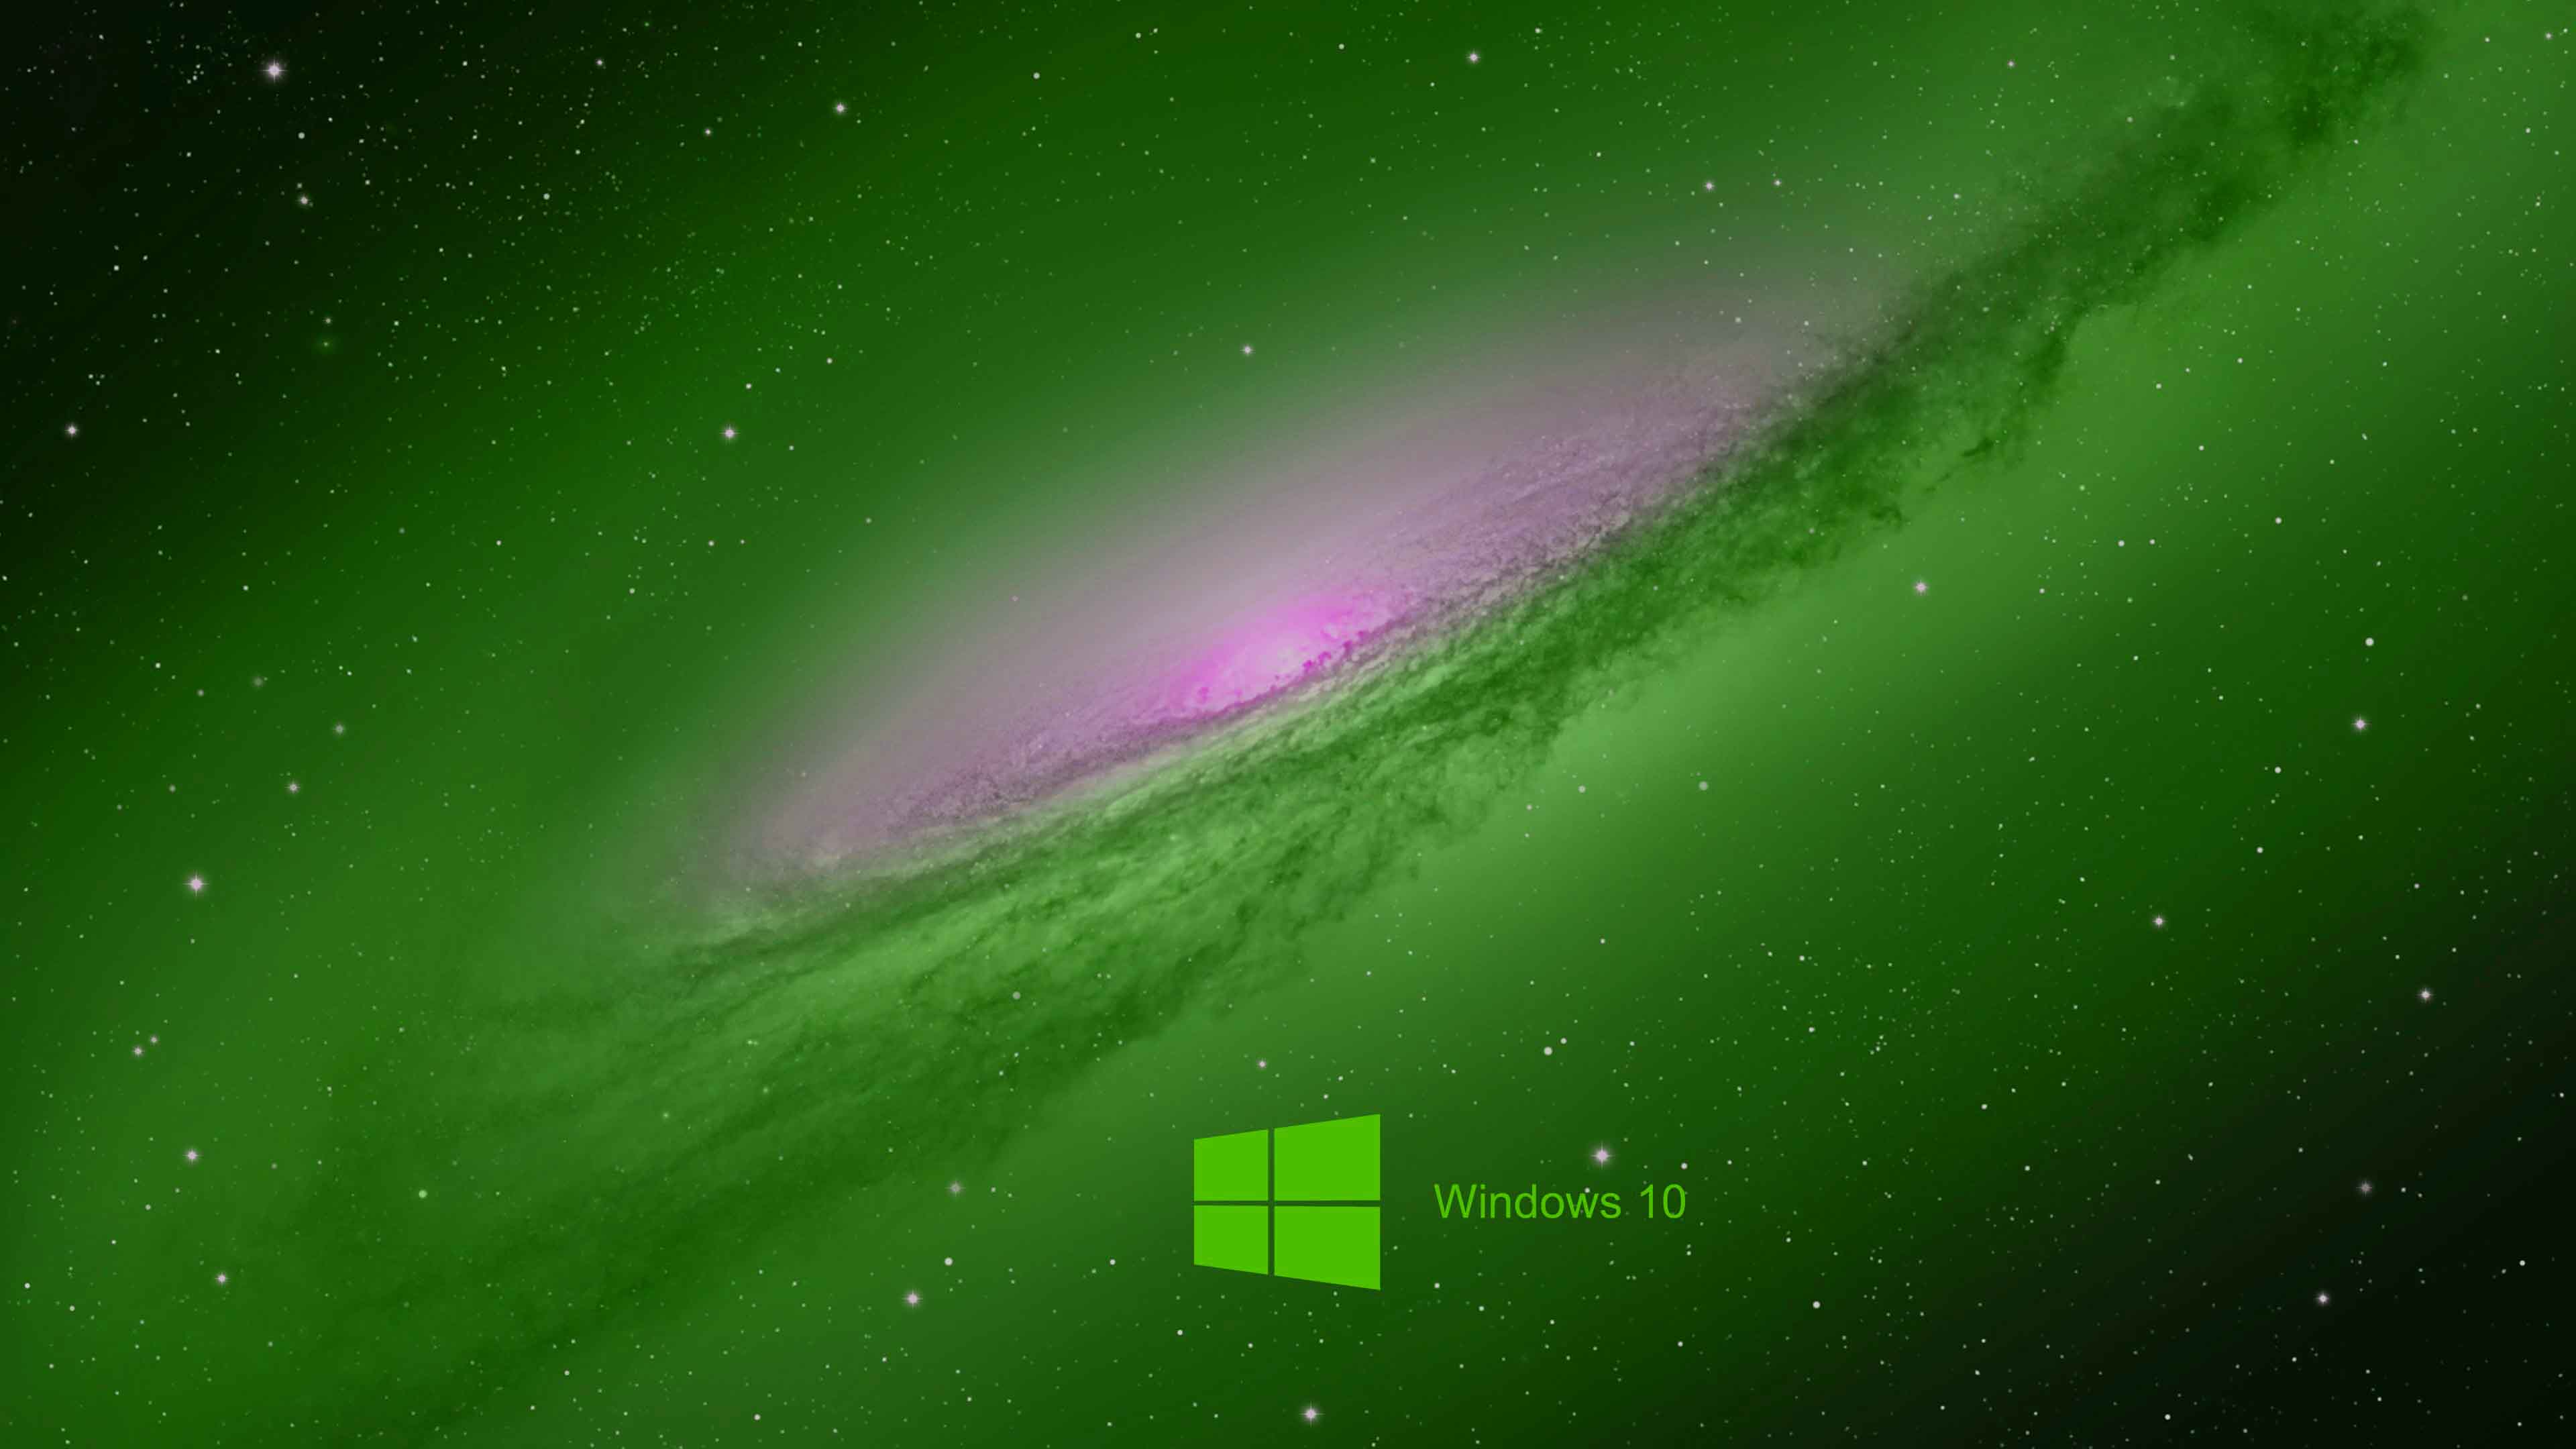 Windows 10 4k Hd Image - Aurora - HD Wallpaper 